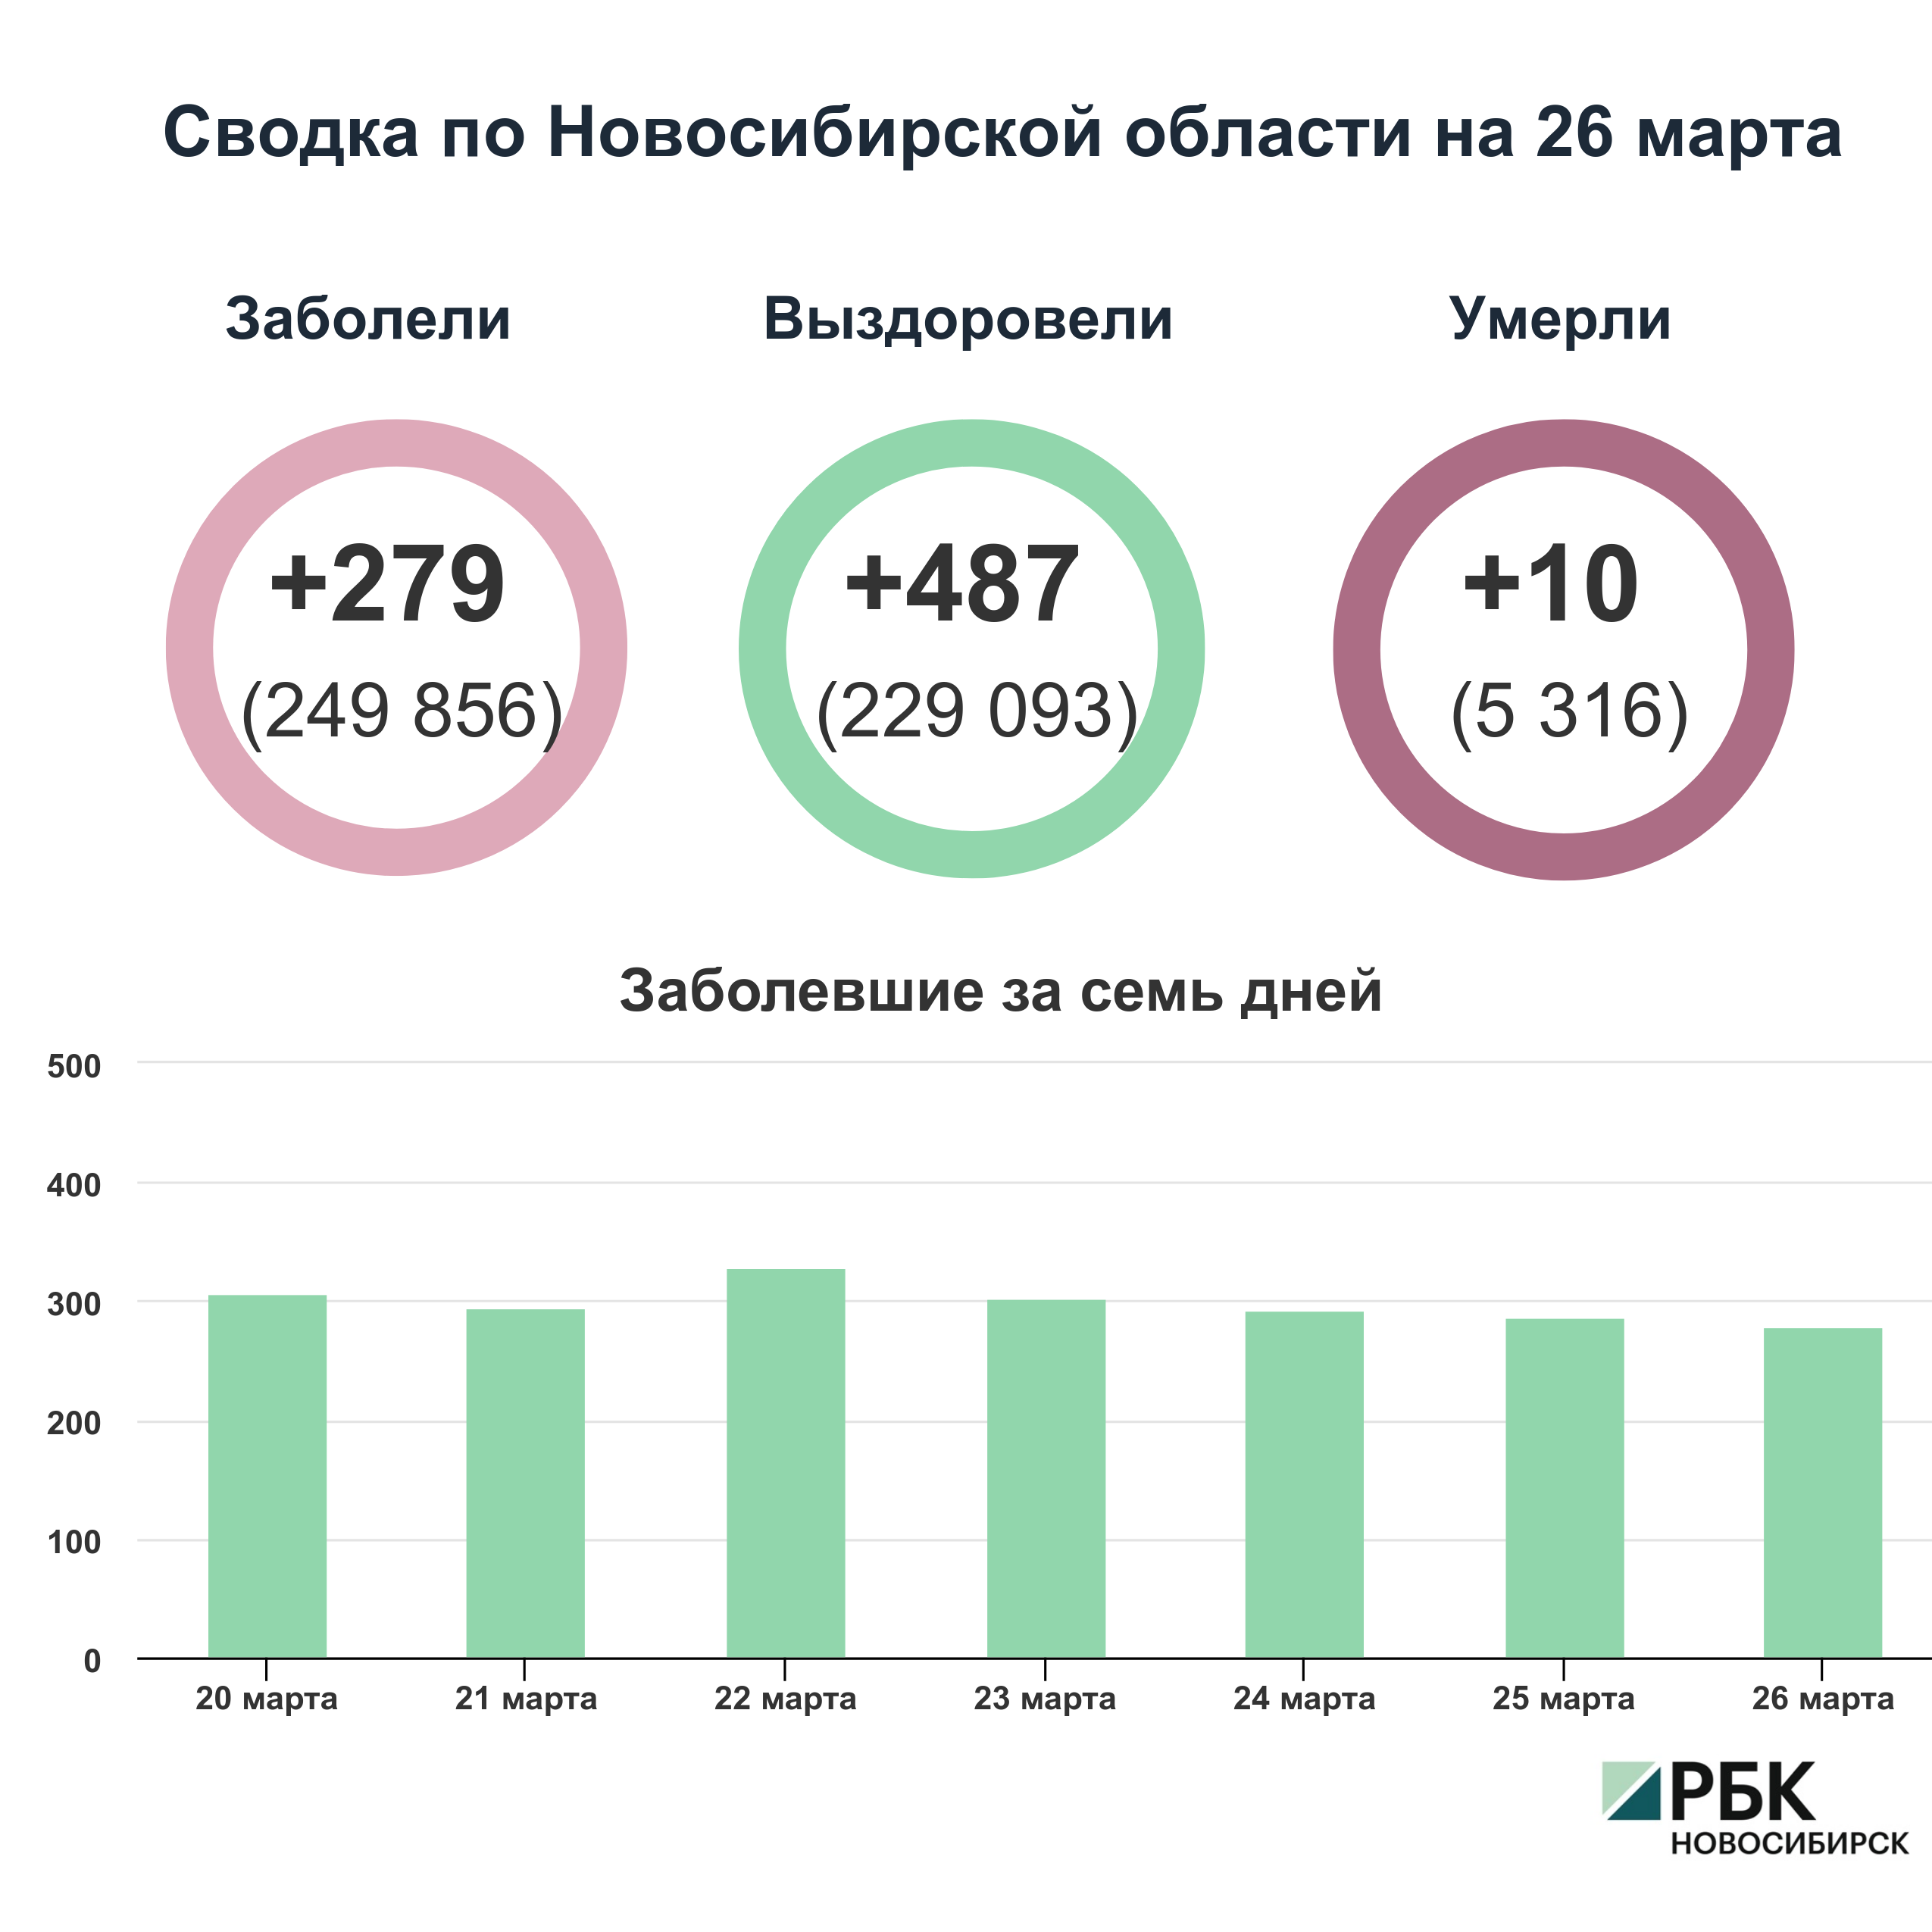 Коронавирус в Новосибирске: сводка на 26 марта